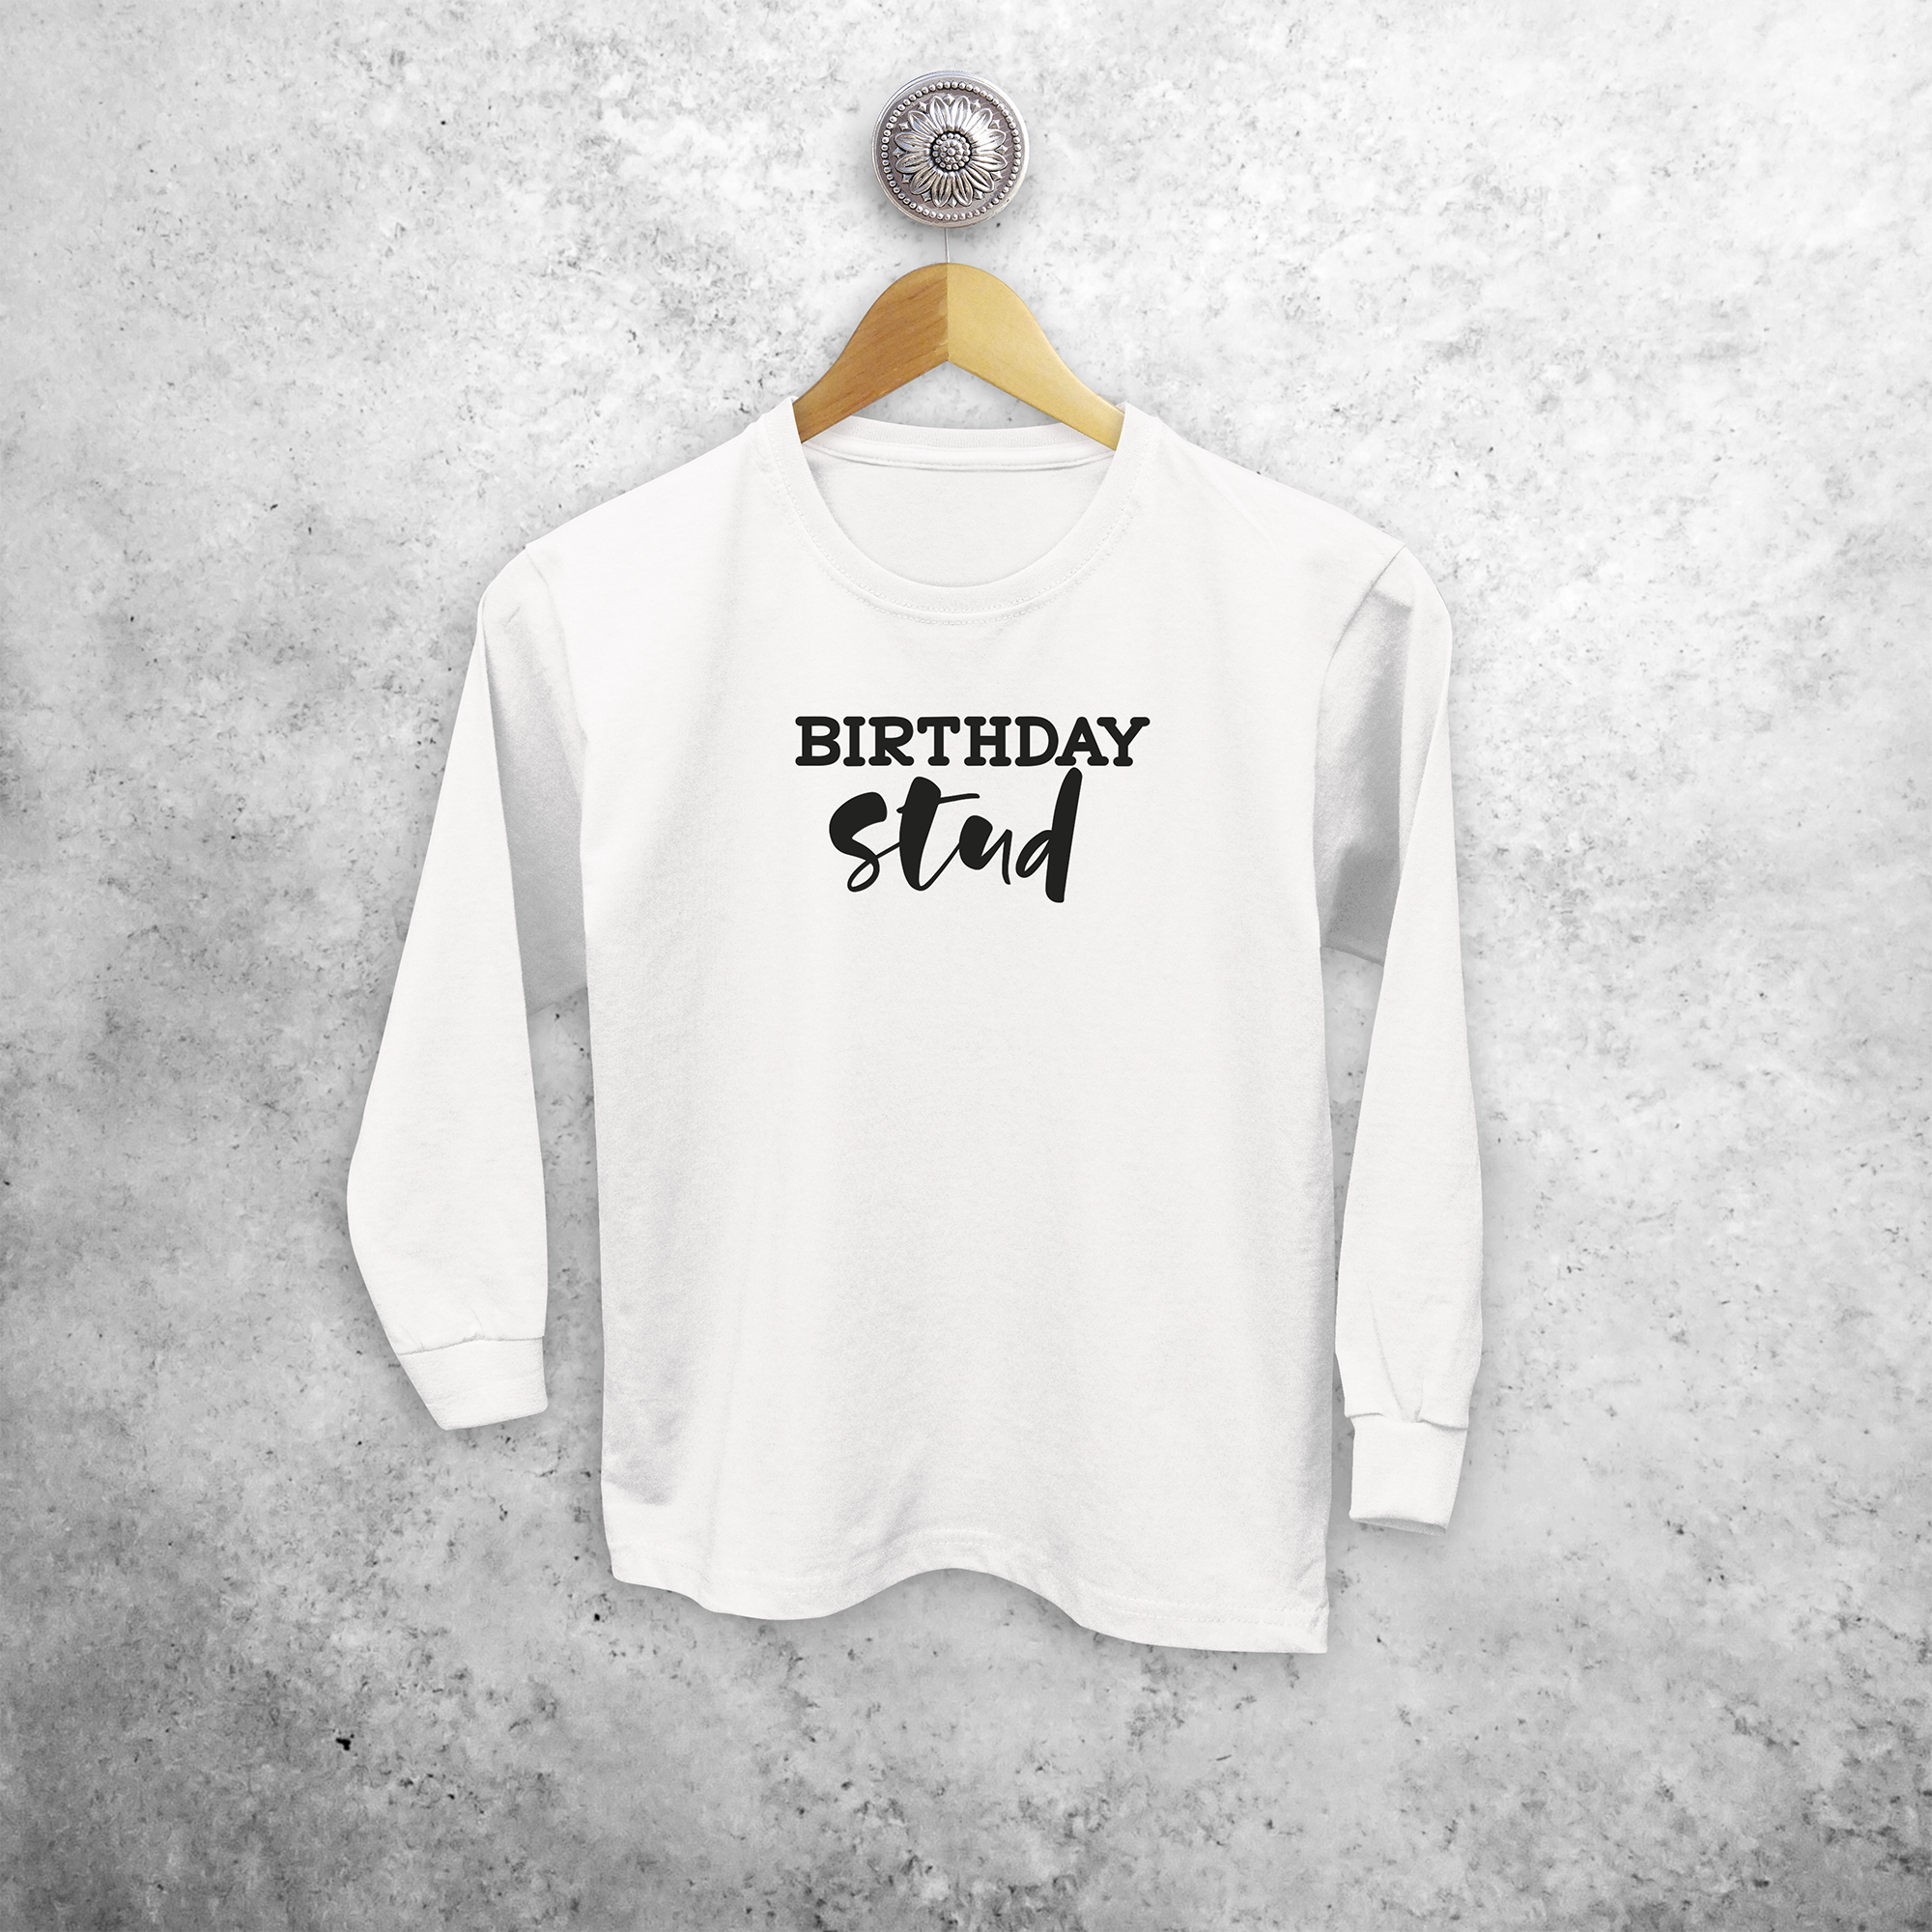 'Birthday stud' kids longsleeve shirt